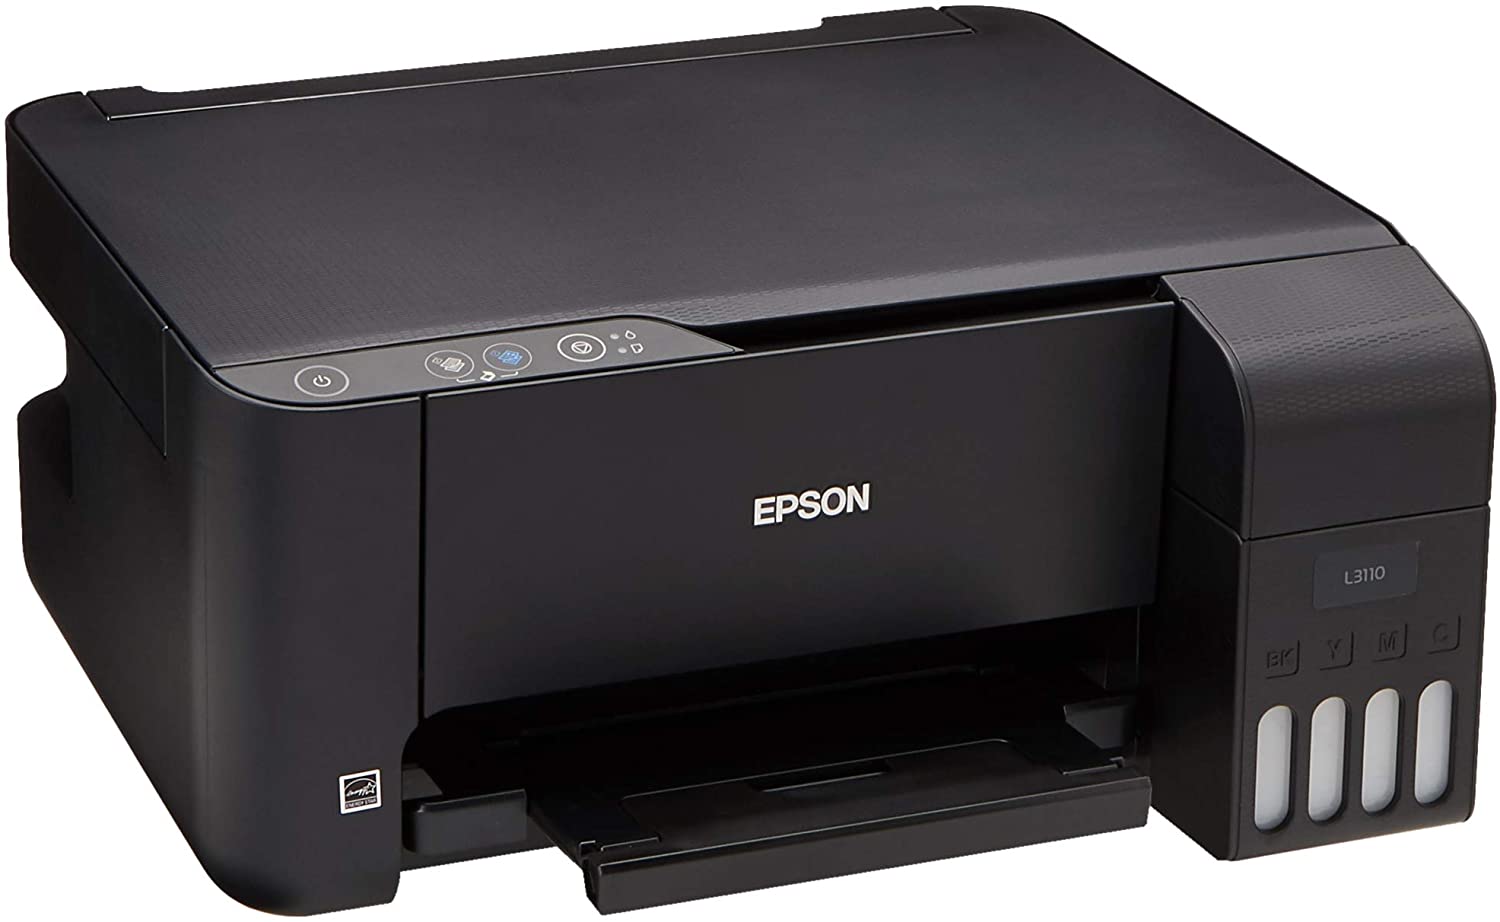 Epson l3250 series. Принтер Epson l3110. Принтер Эпсон 3110. Принтер Epson 3110 струйный. Принтер Epson l3151.